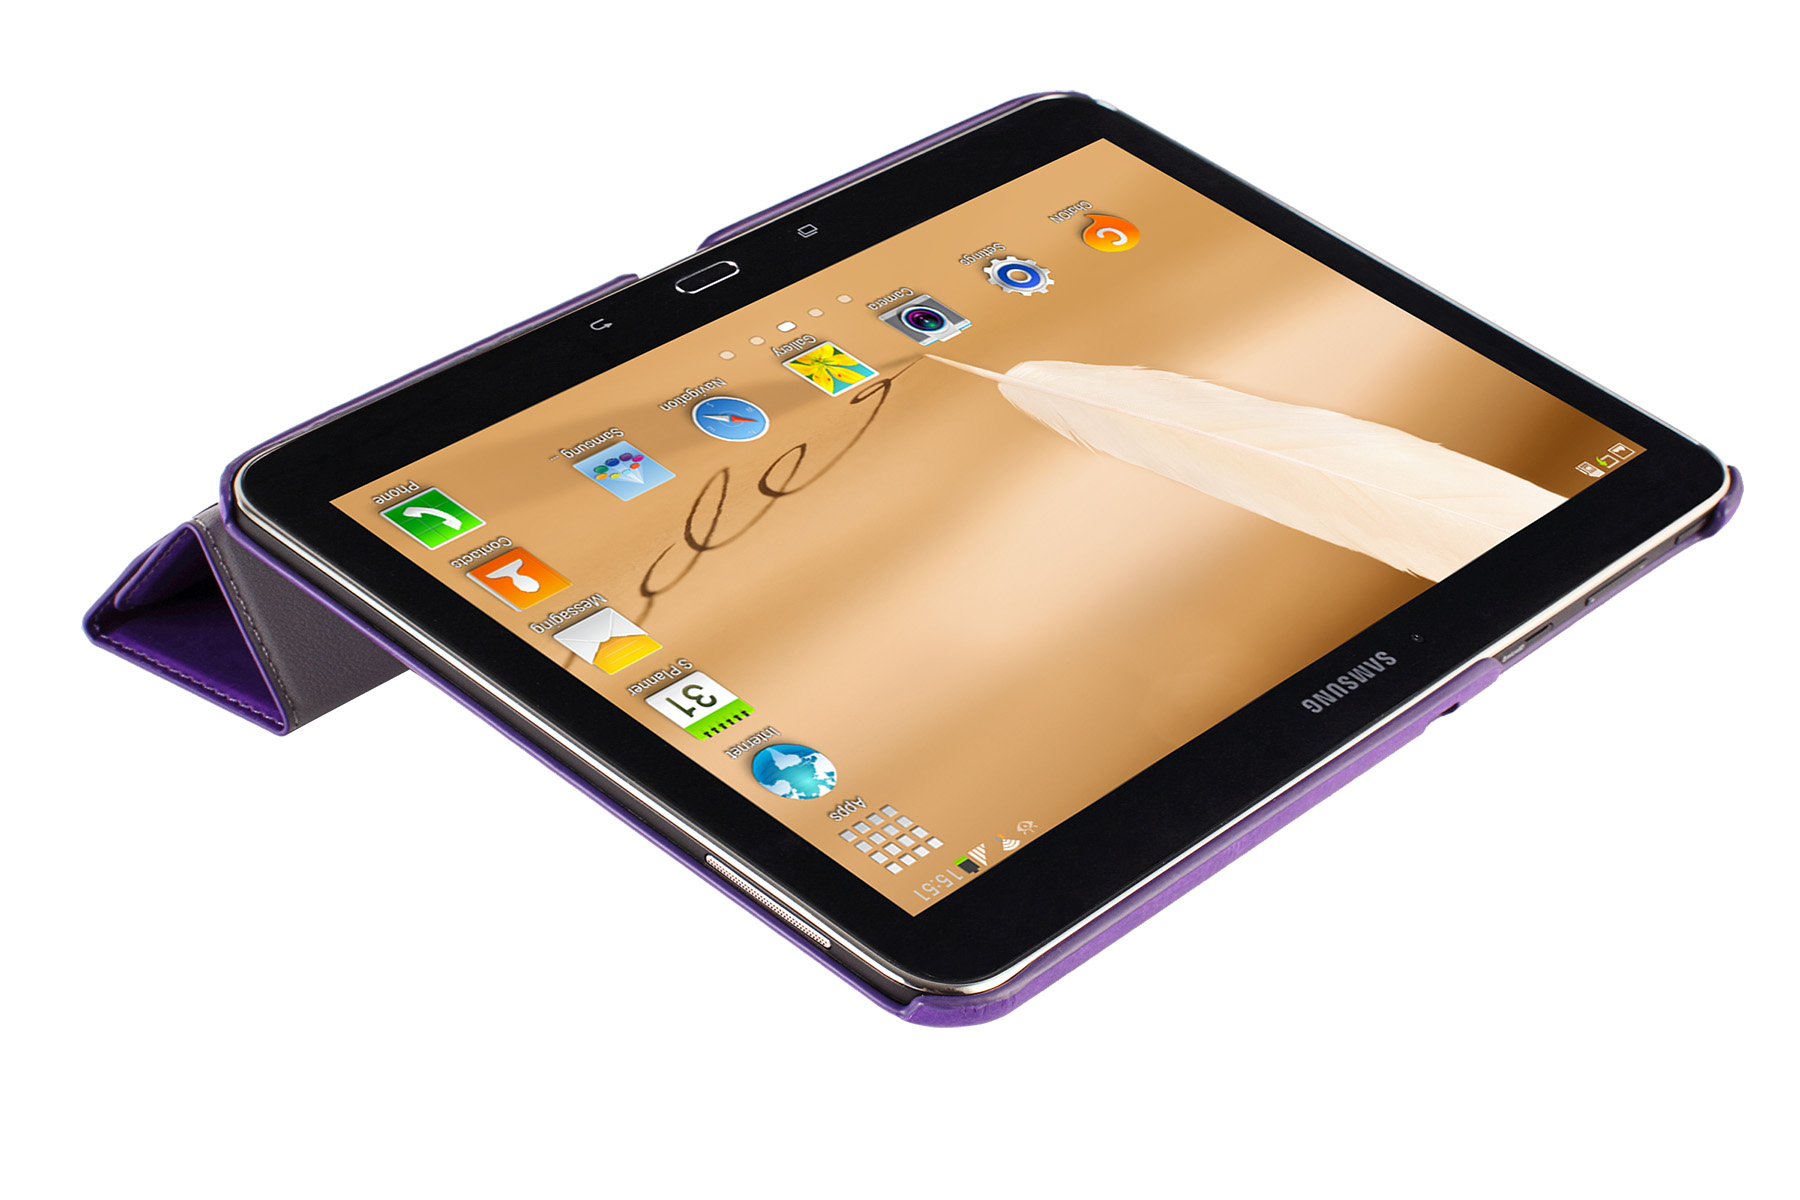 Чехол-книжка G-Case Slim Premium для Samsung Galaxy Tab 4 10.1 Purple